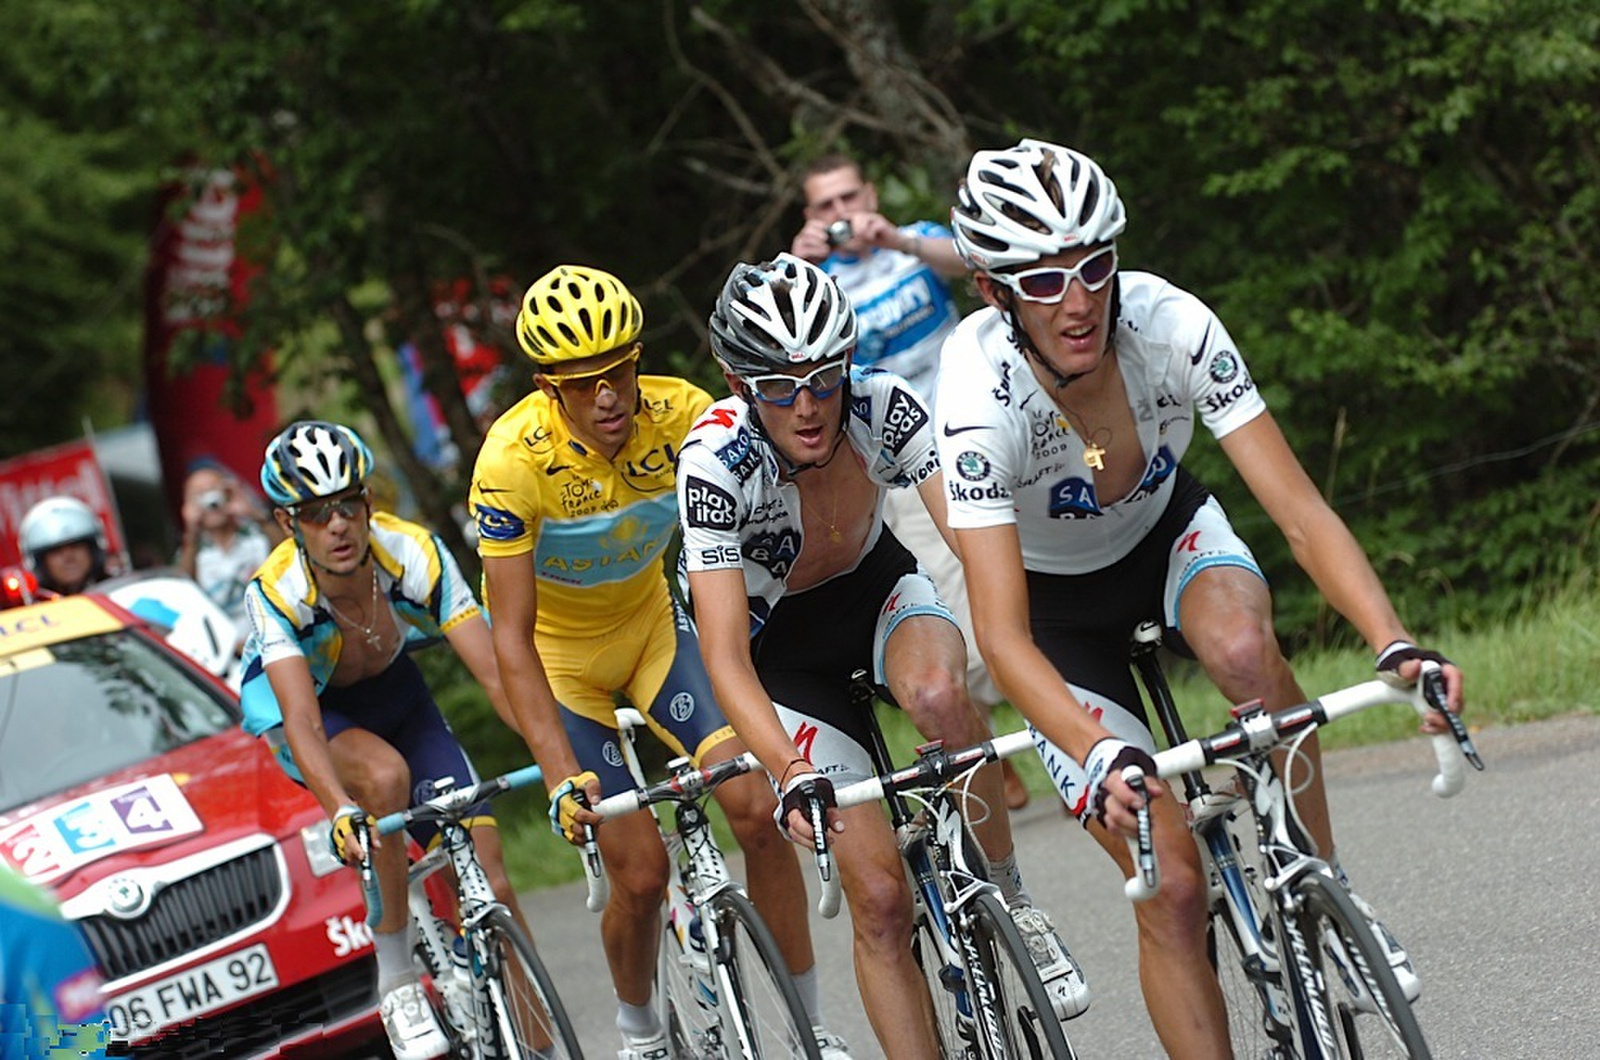 347 - Tour de France - Kloden, Contador,F Schleck,A.Schleck